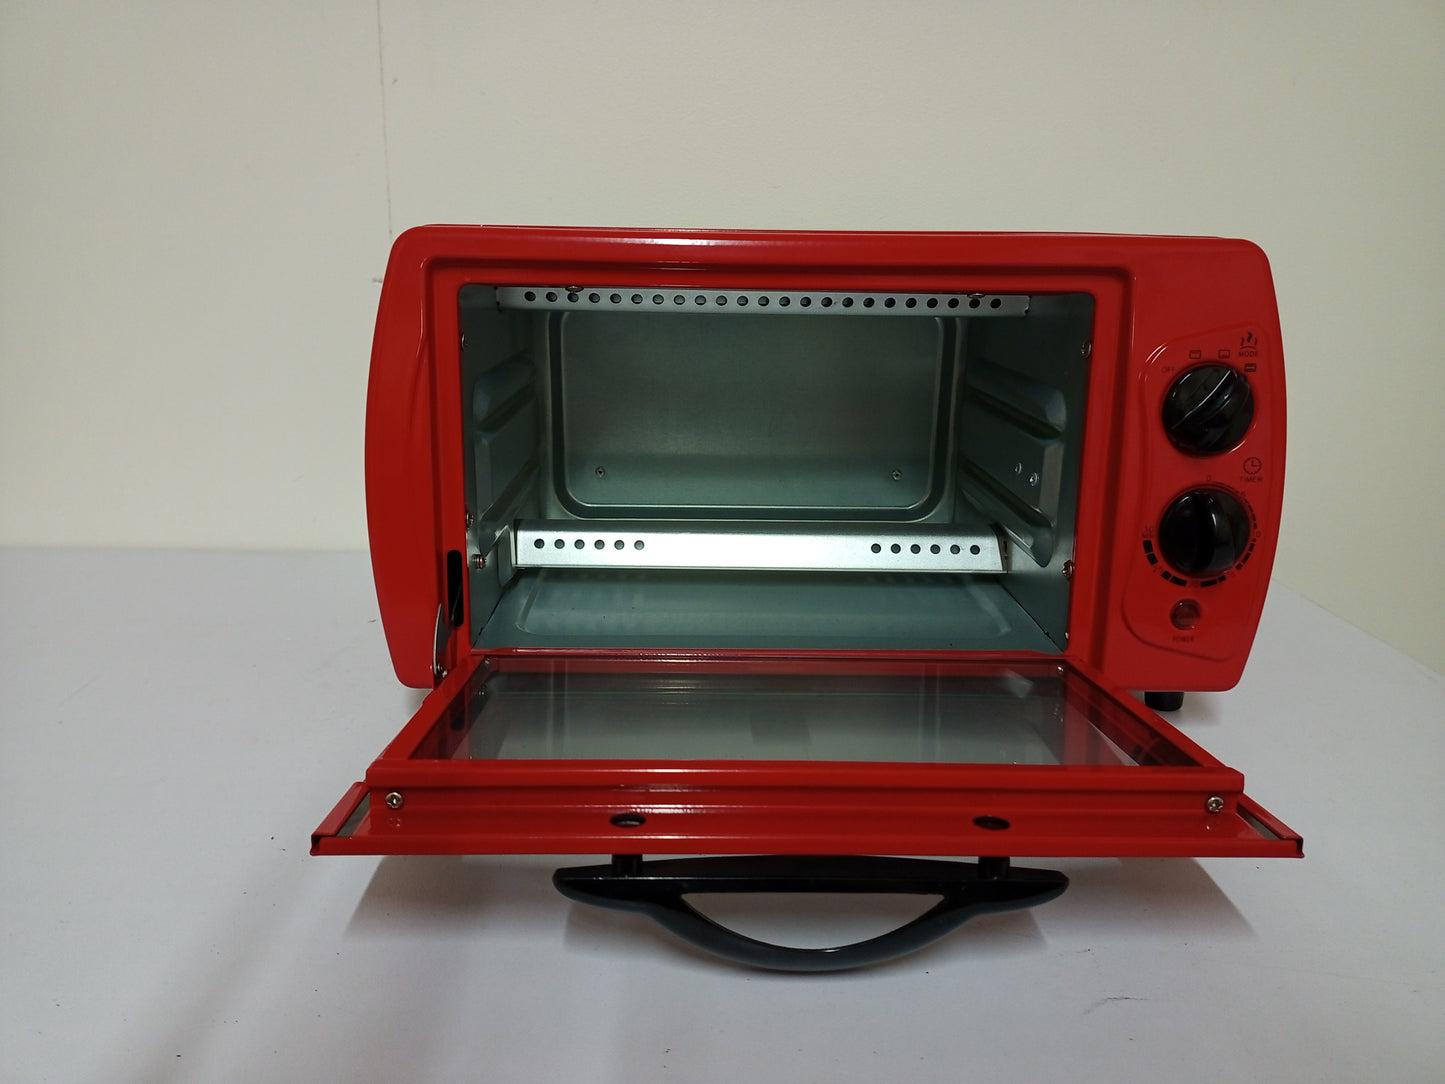 Mini oven